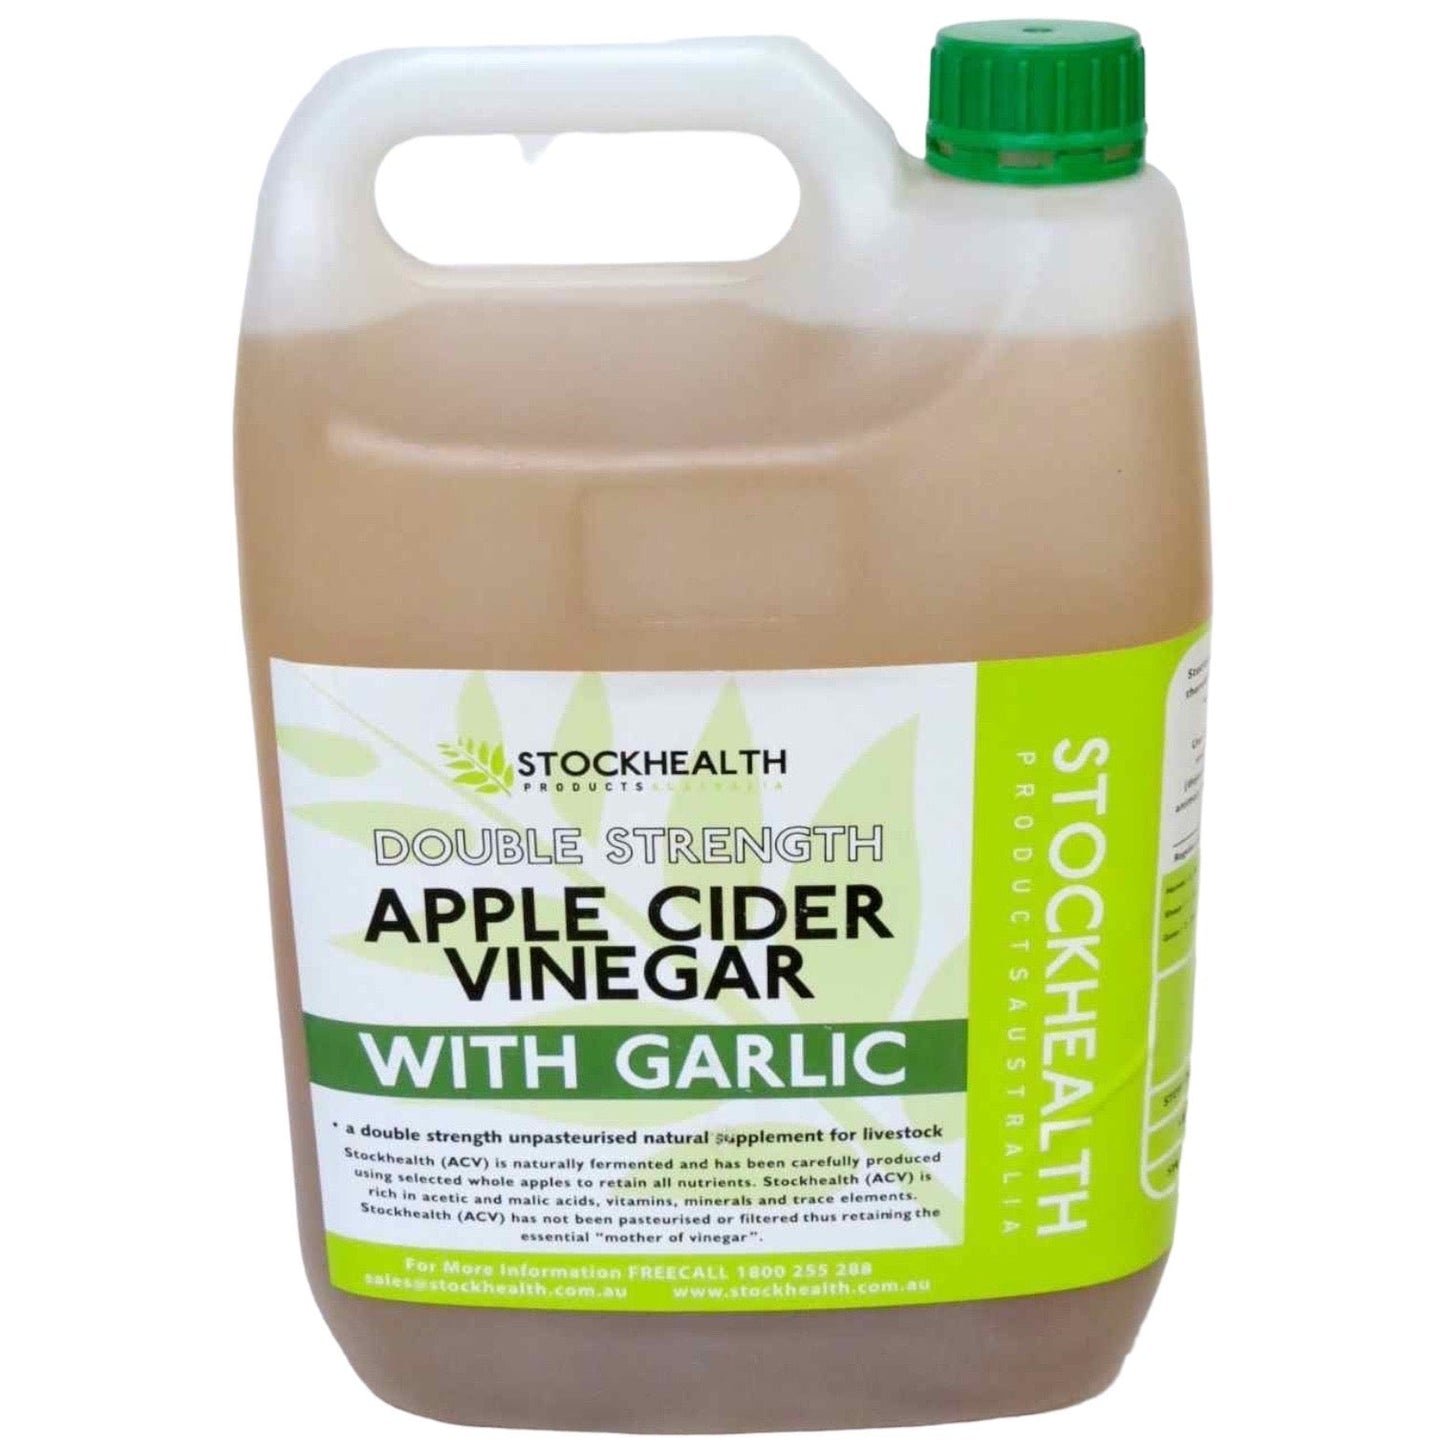 Stockhealth Double Strength Apple Cider Vinegar With Garlic